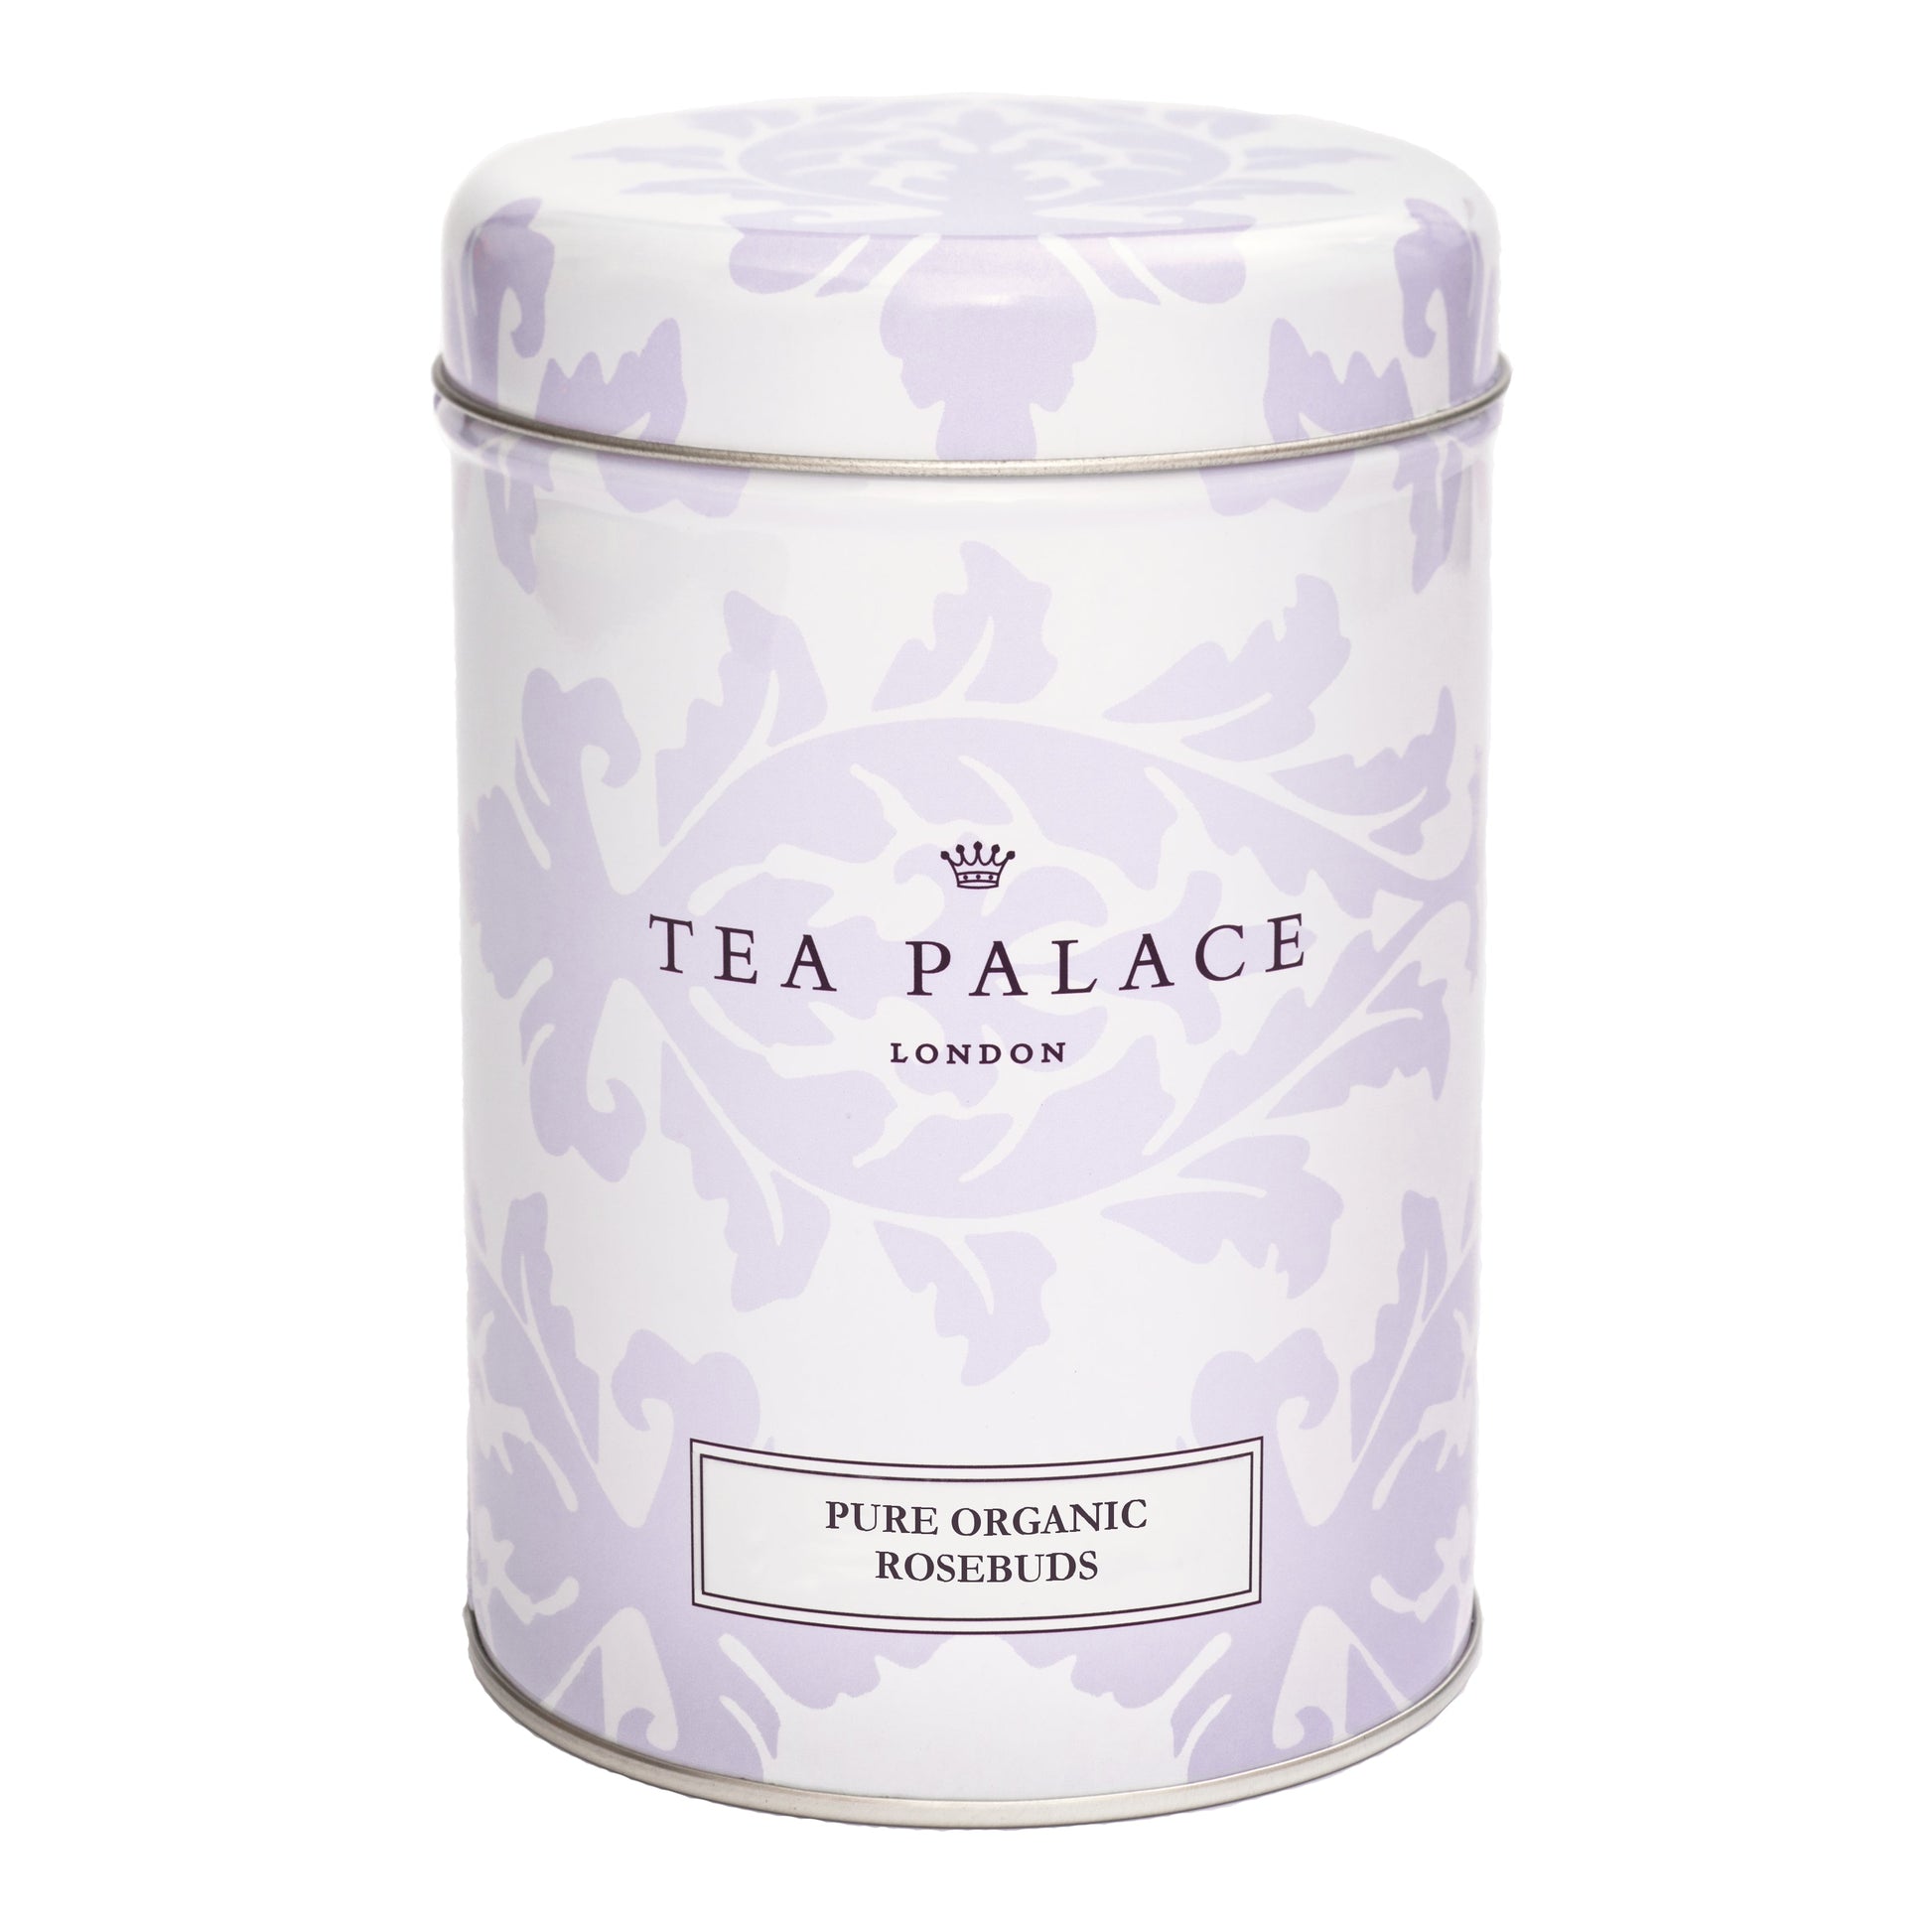 Tea Palace organic rose bud infusion